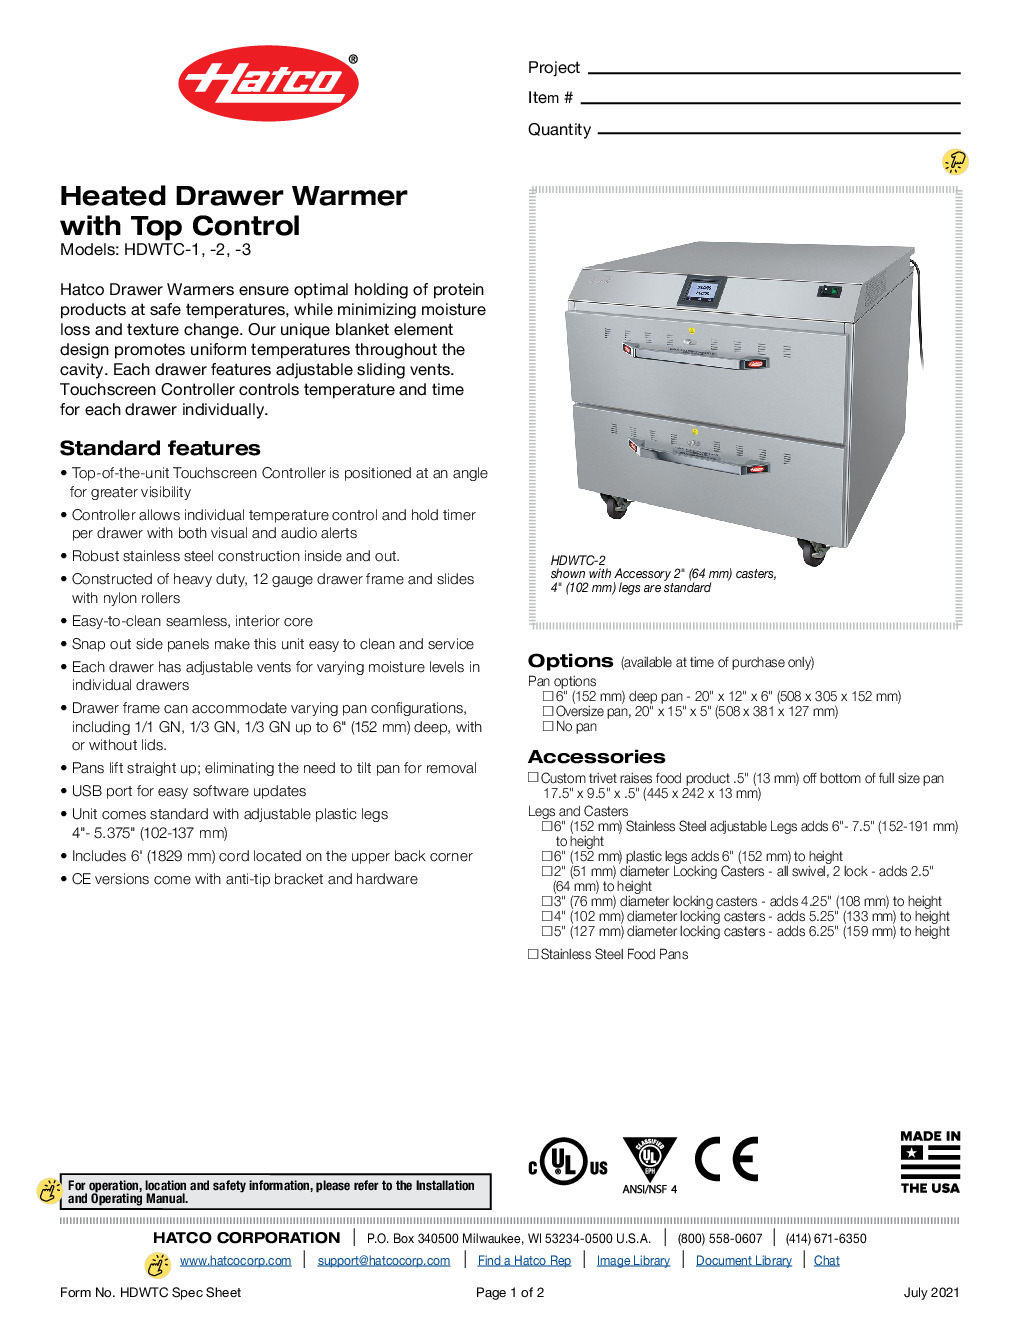 Hatco HDWTC-2 Free Standing Warming Drawer